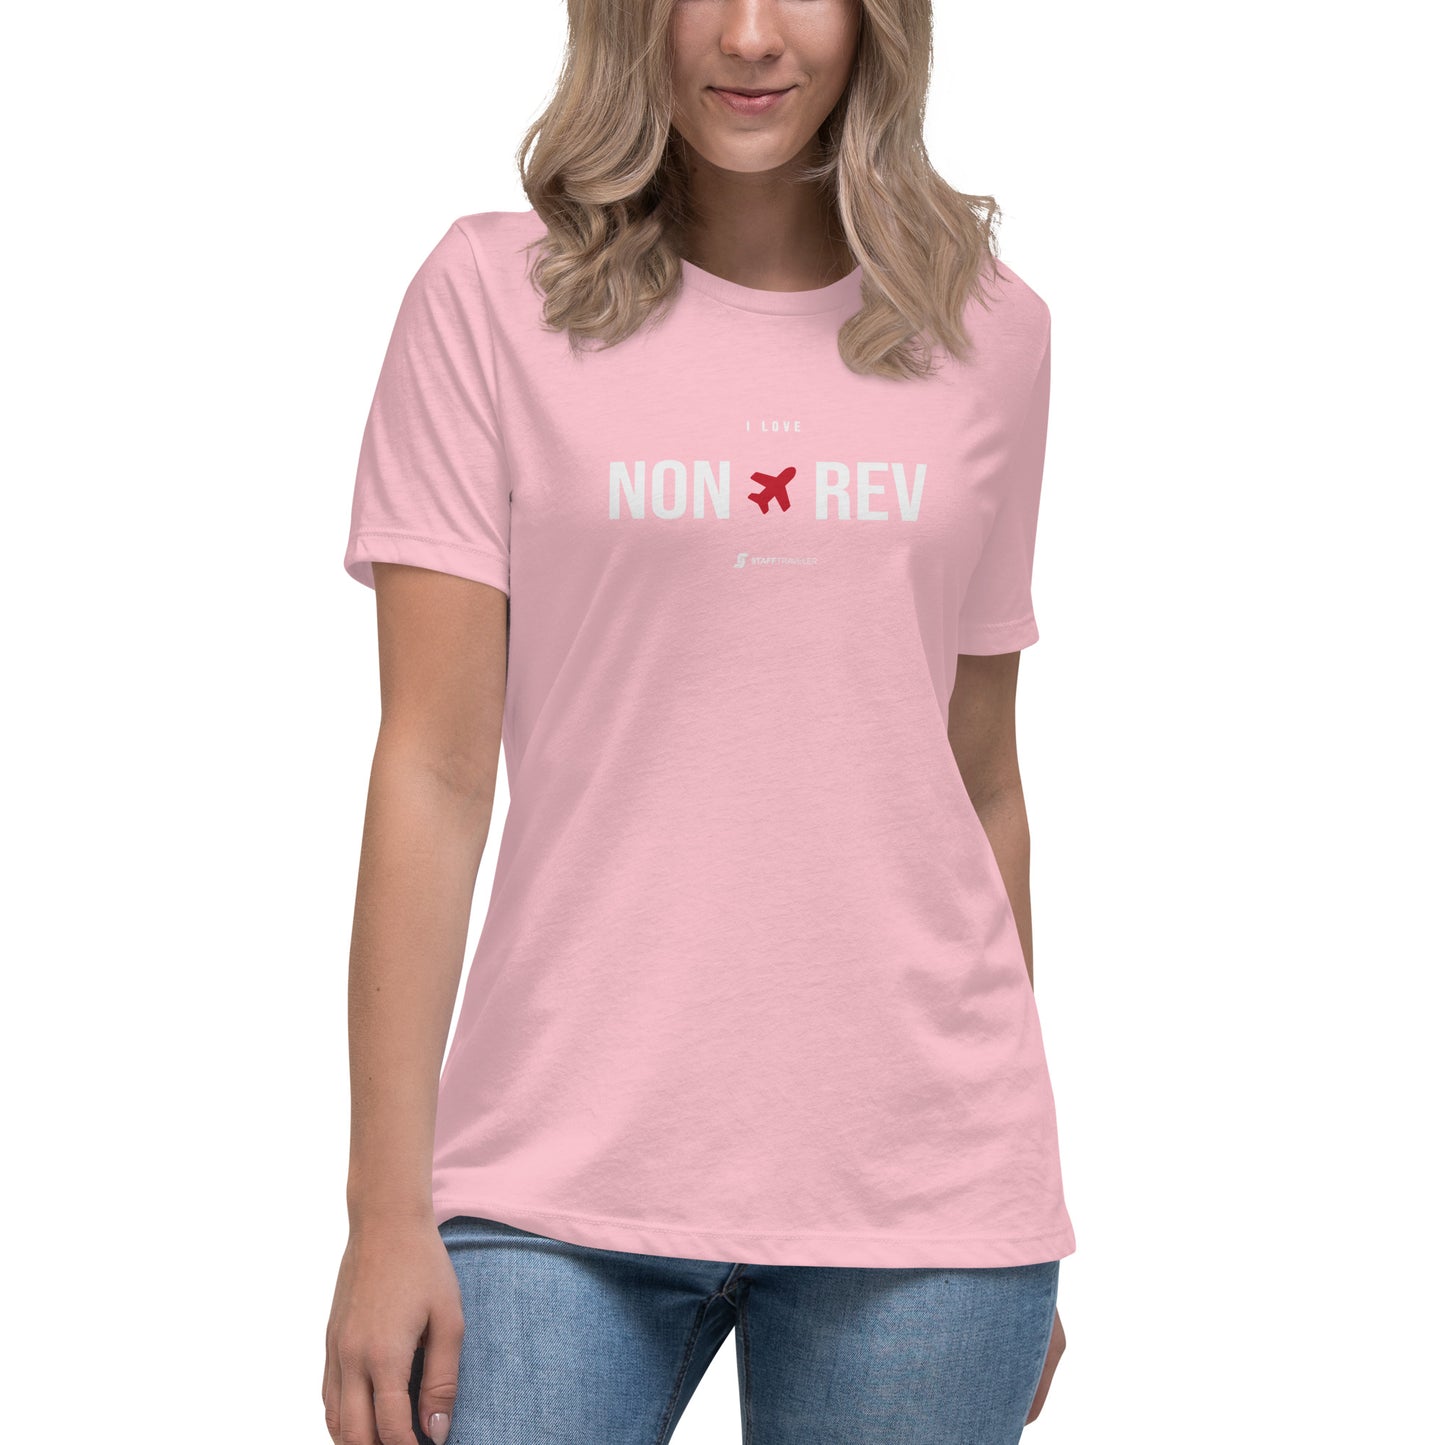 T-shirt I love Non-rev femme